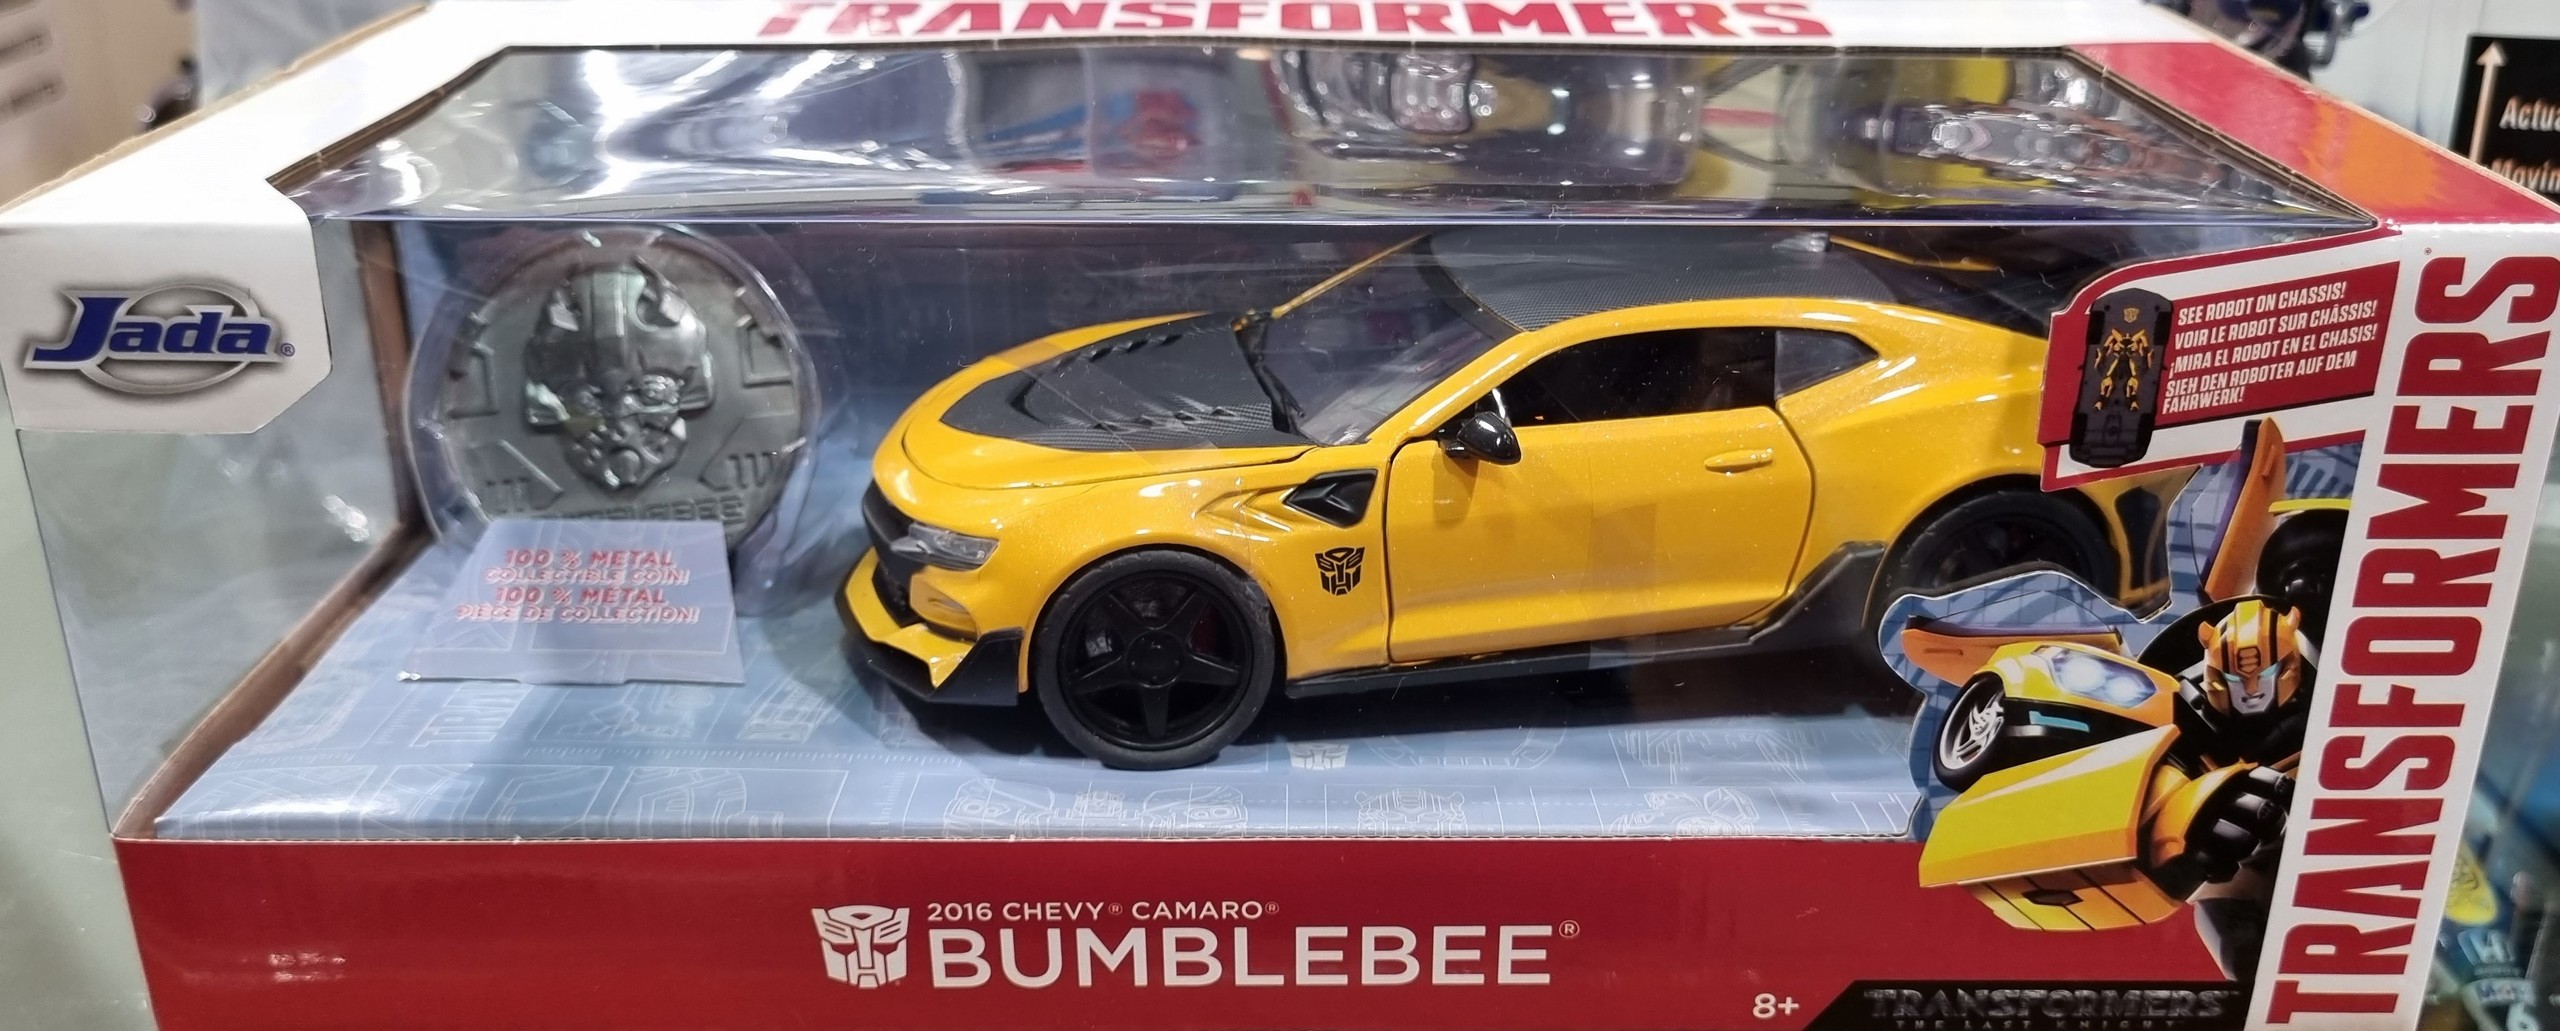 Transformers 2016 Chevy Camaro Transformers Bumblebee & Collectible Coin 1/24 Jada